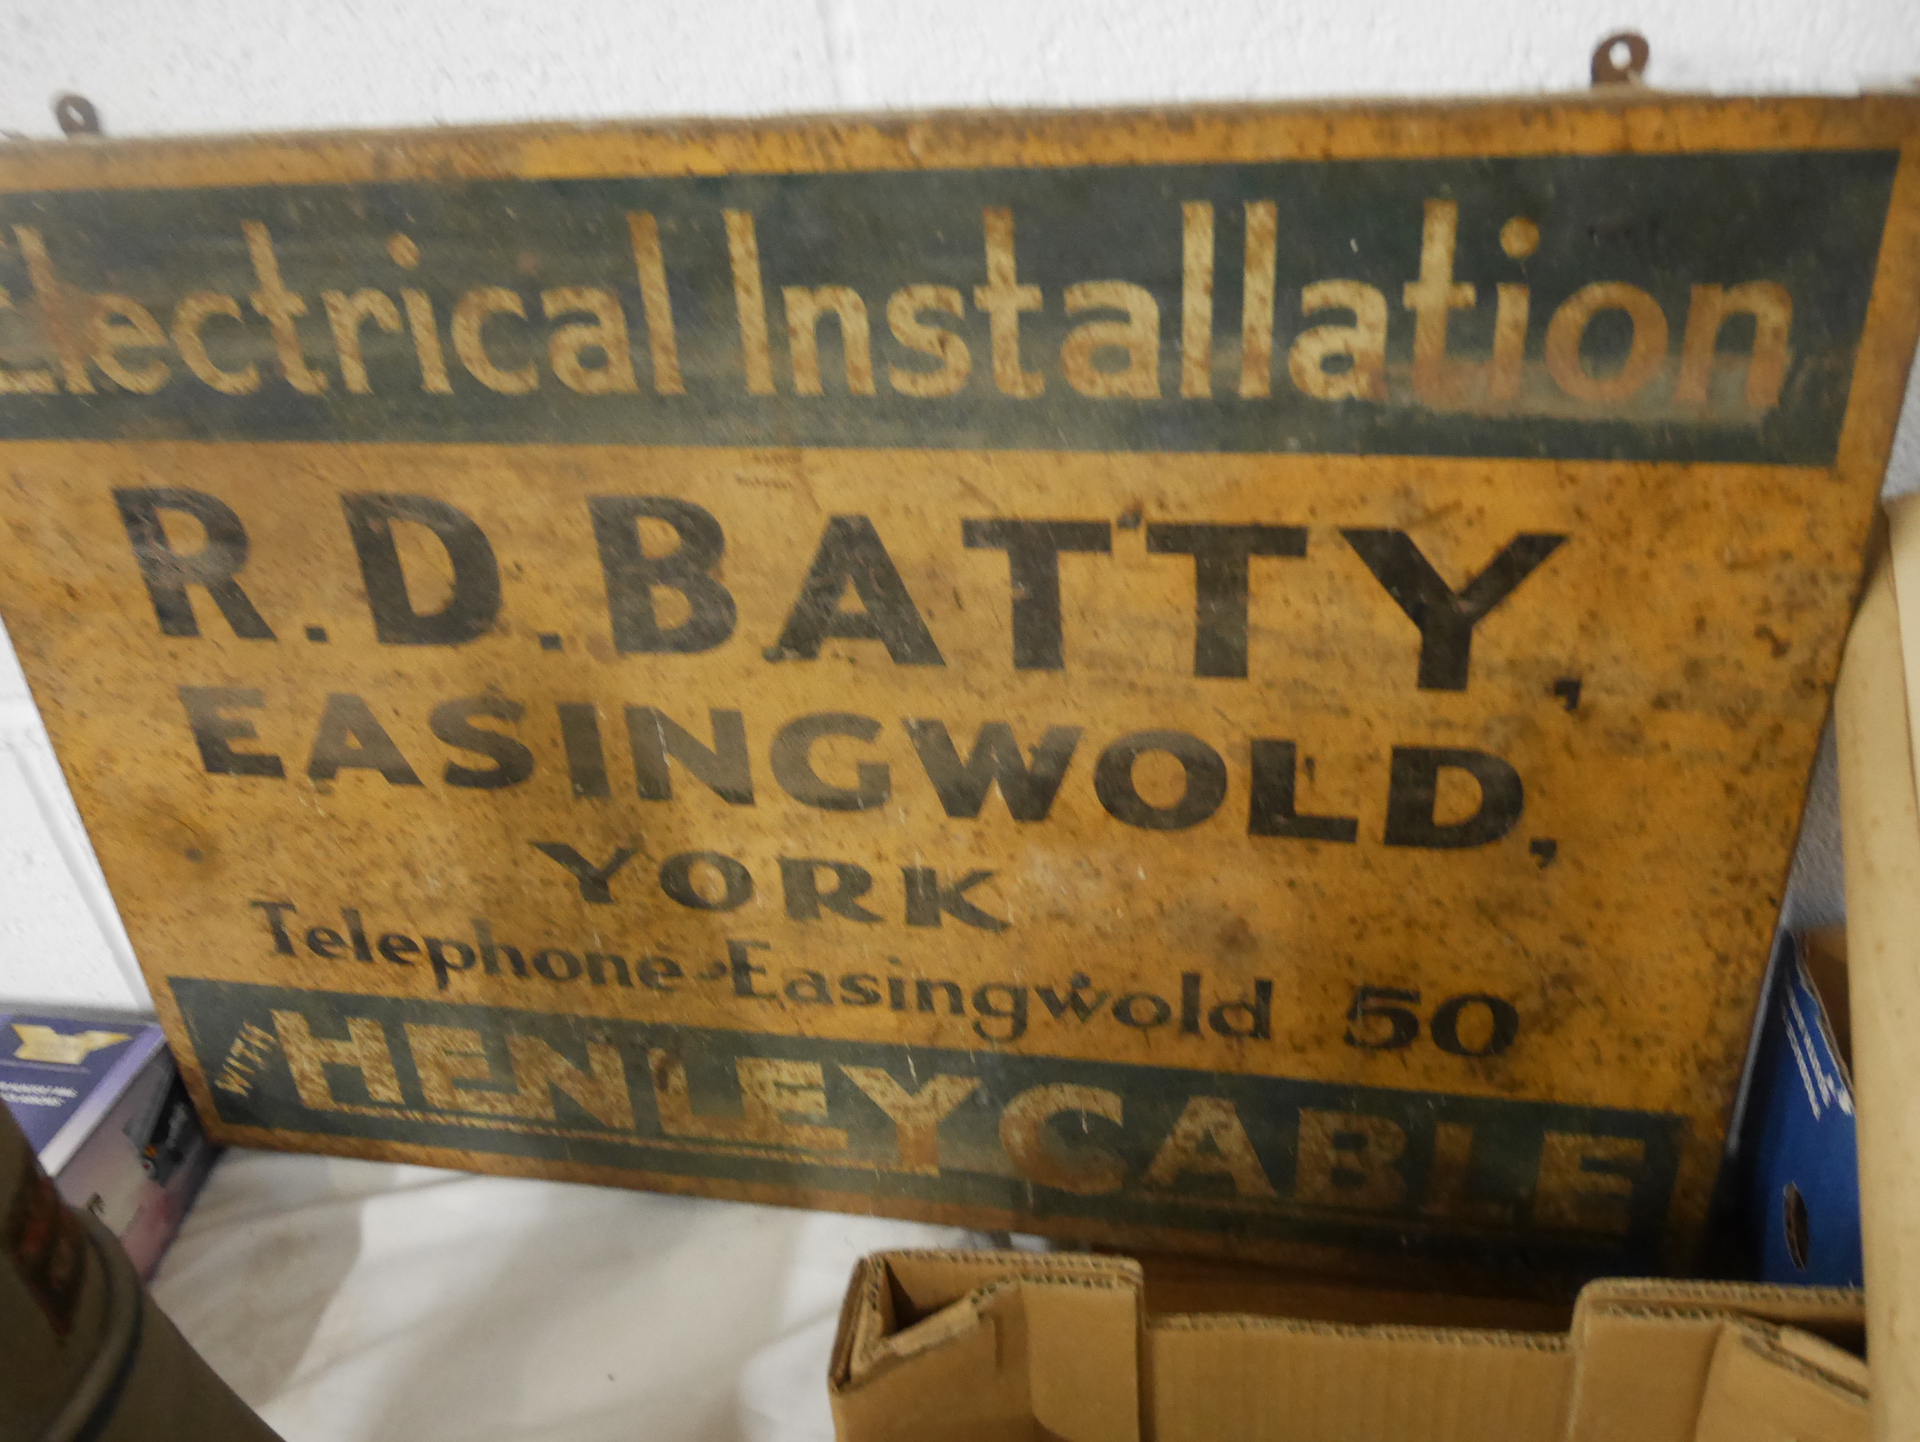 Metal sign - R D Batty Easingwold